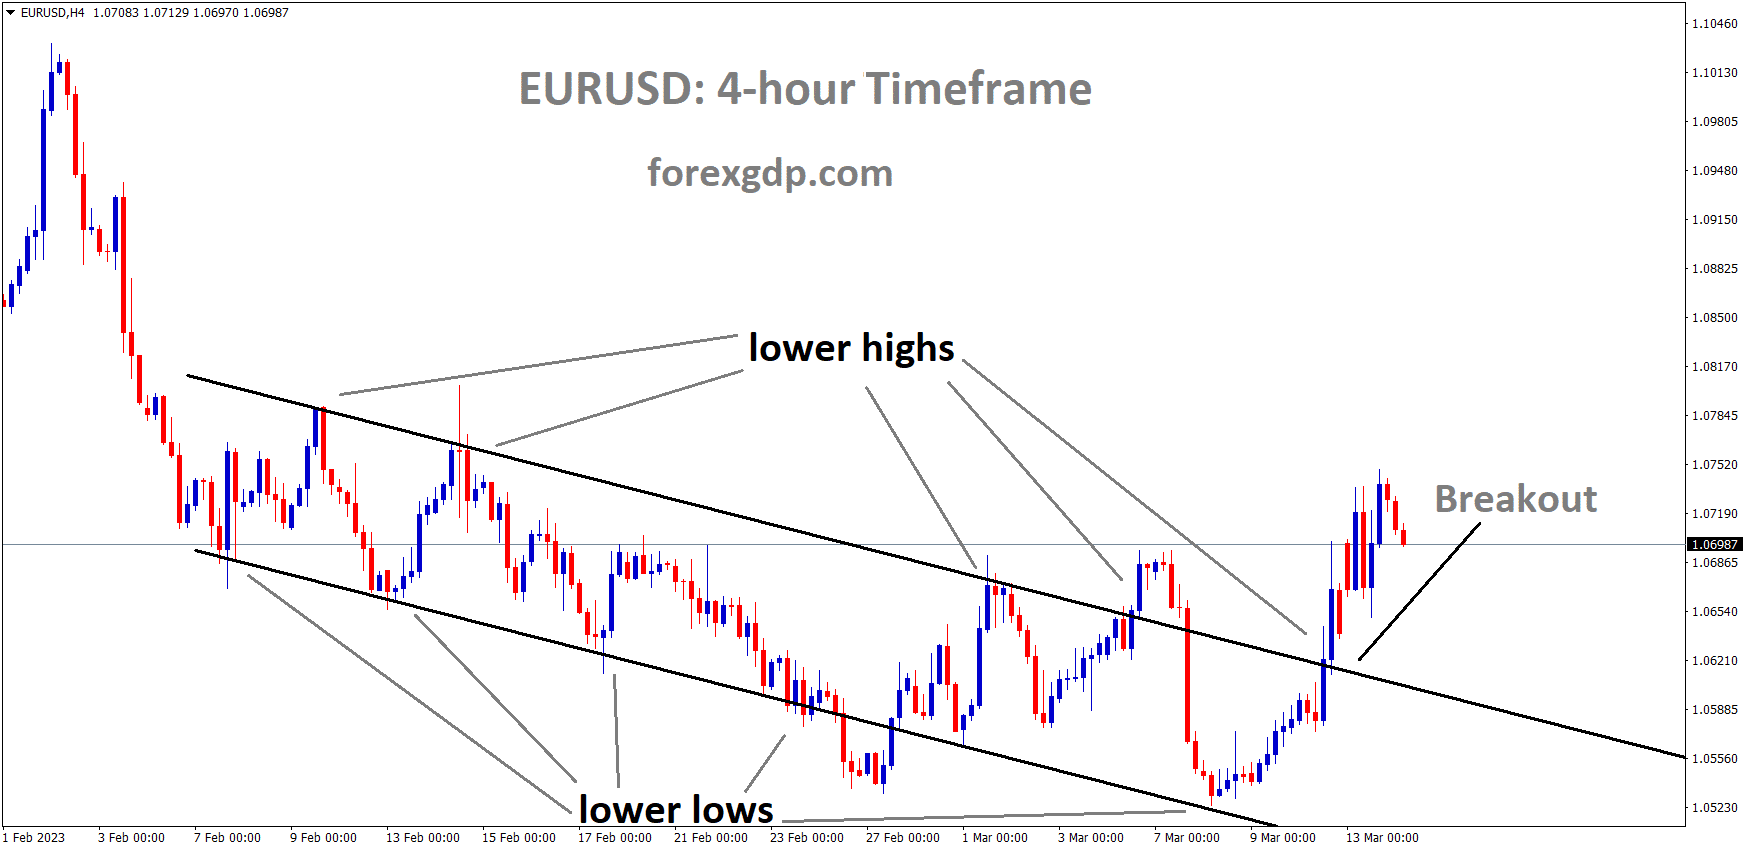 EURUSD H4 TF analysis Market has broken the Descending channel in Upside